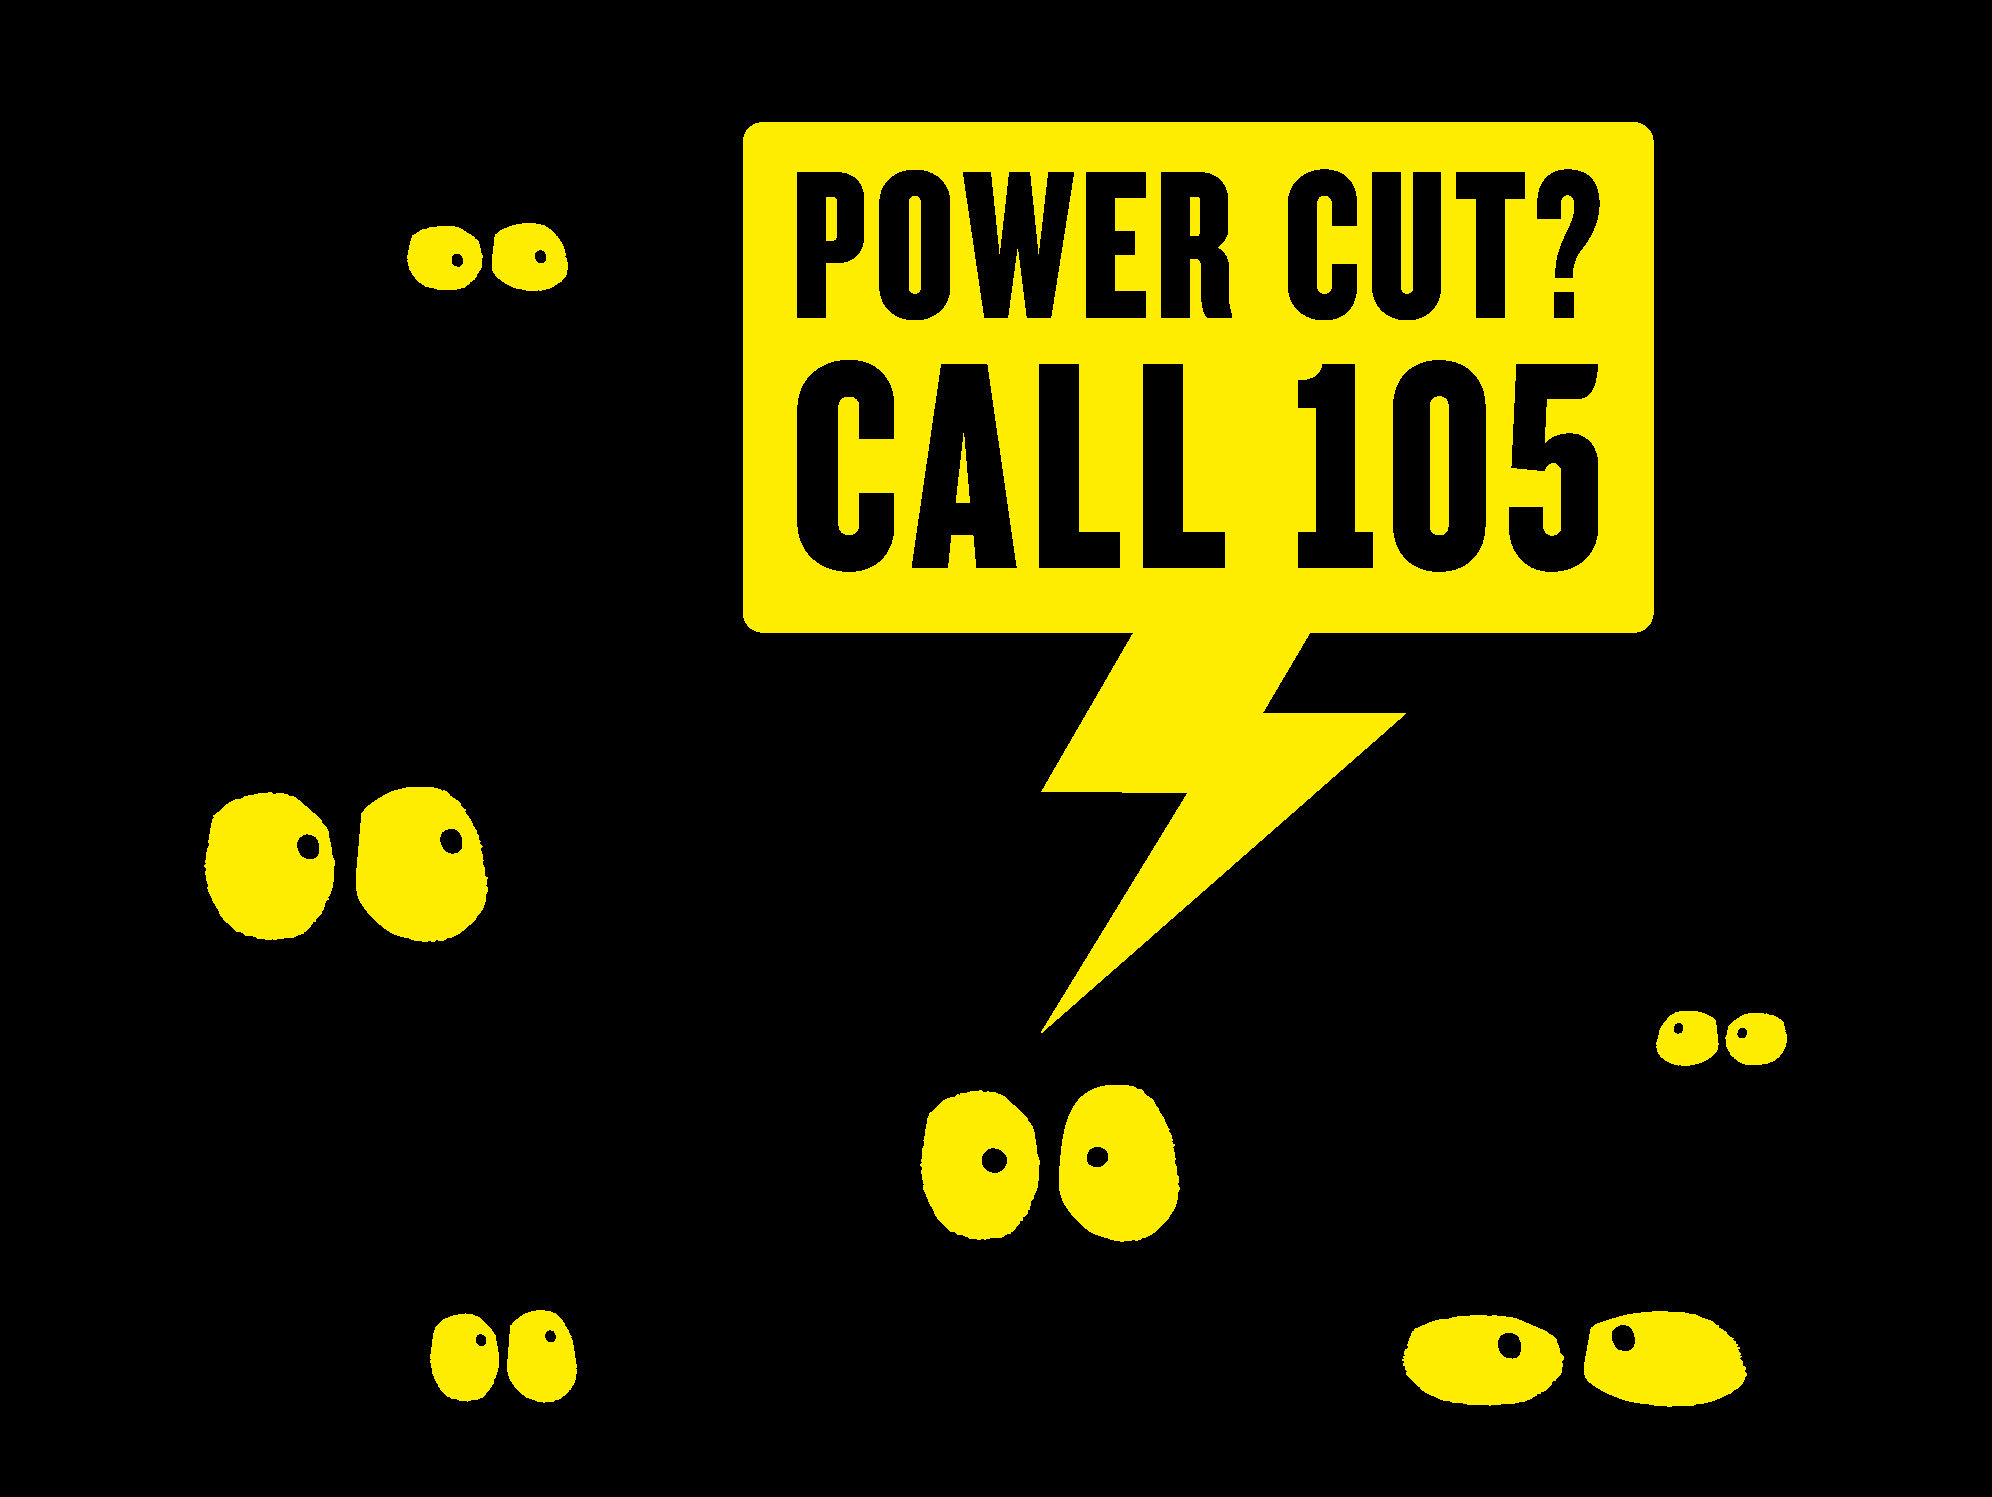 Power cut ? call 105